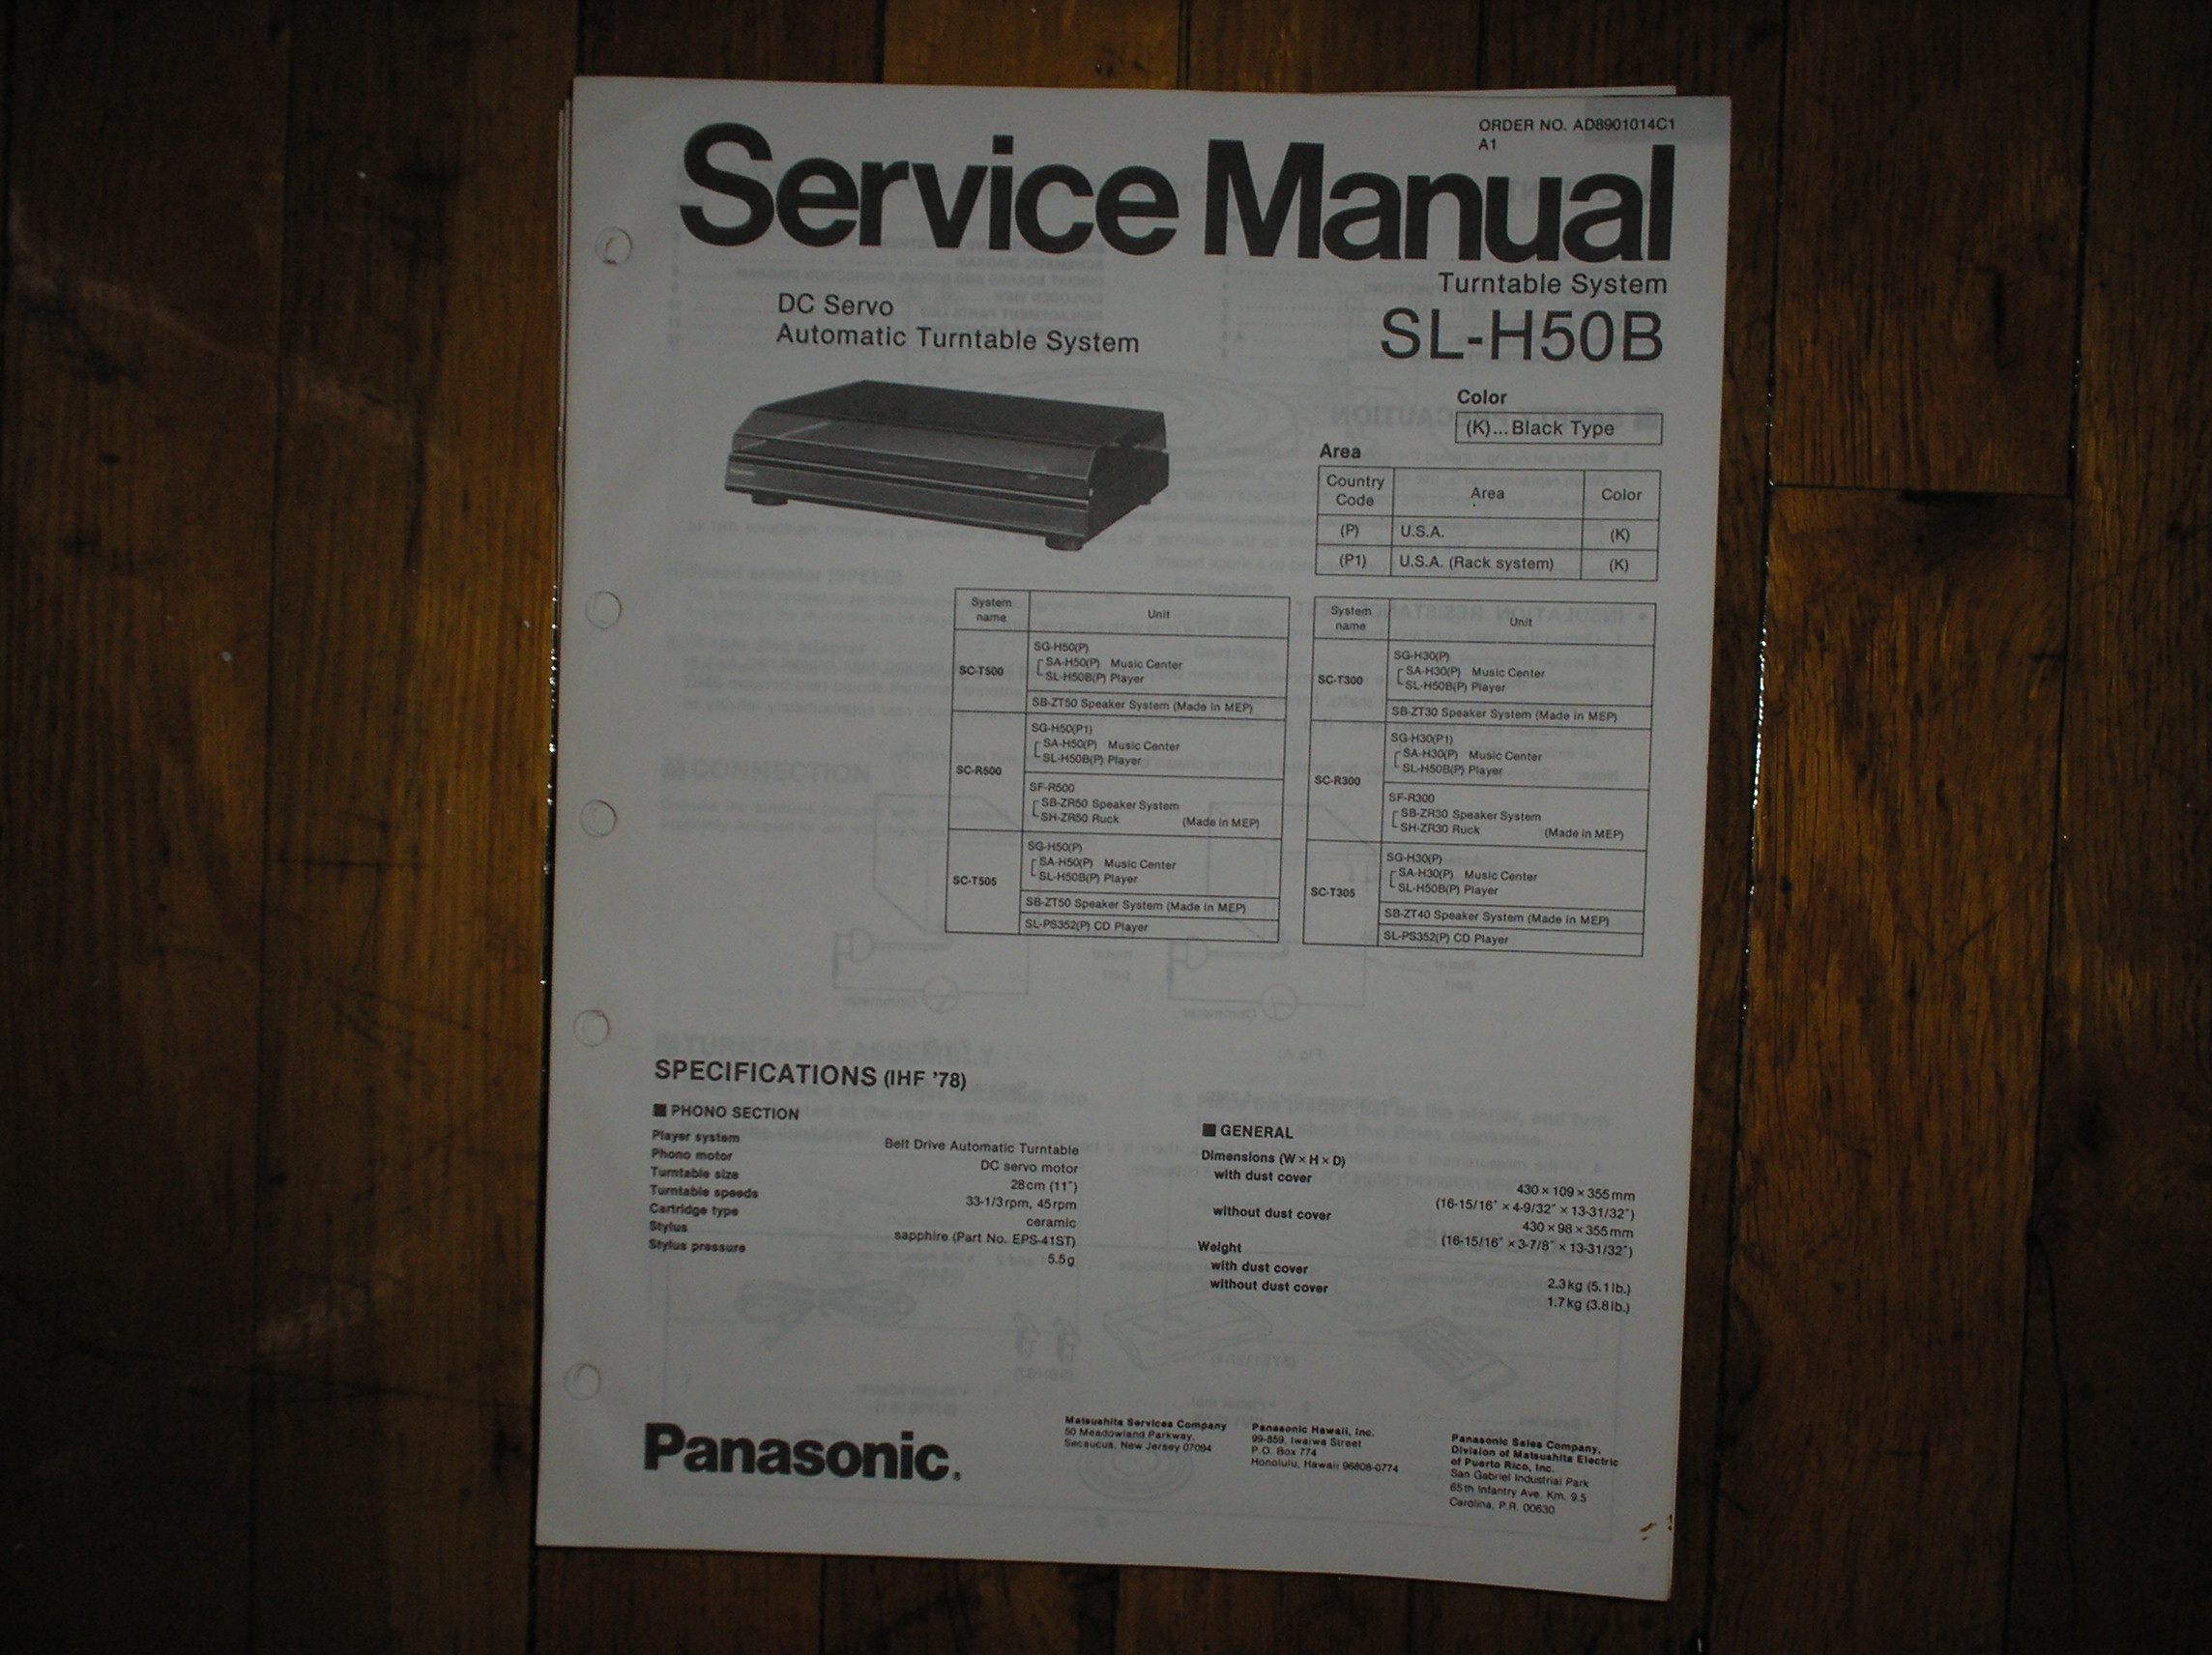 SL-H50B Turntable Service Manual